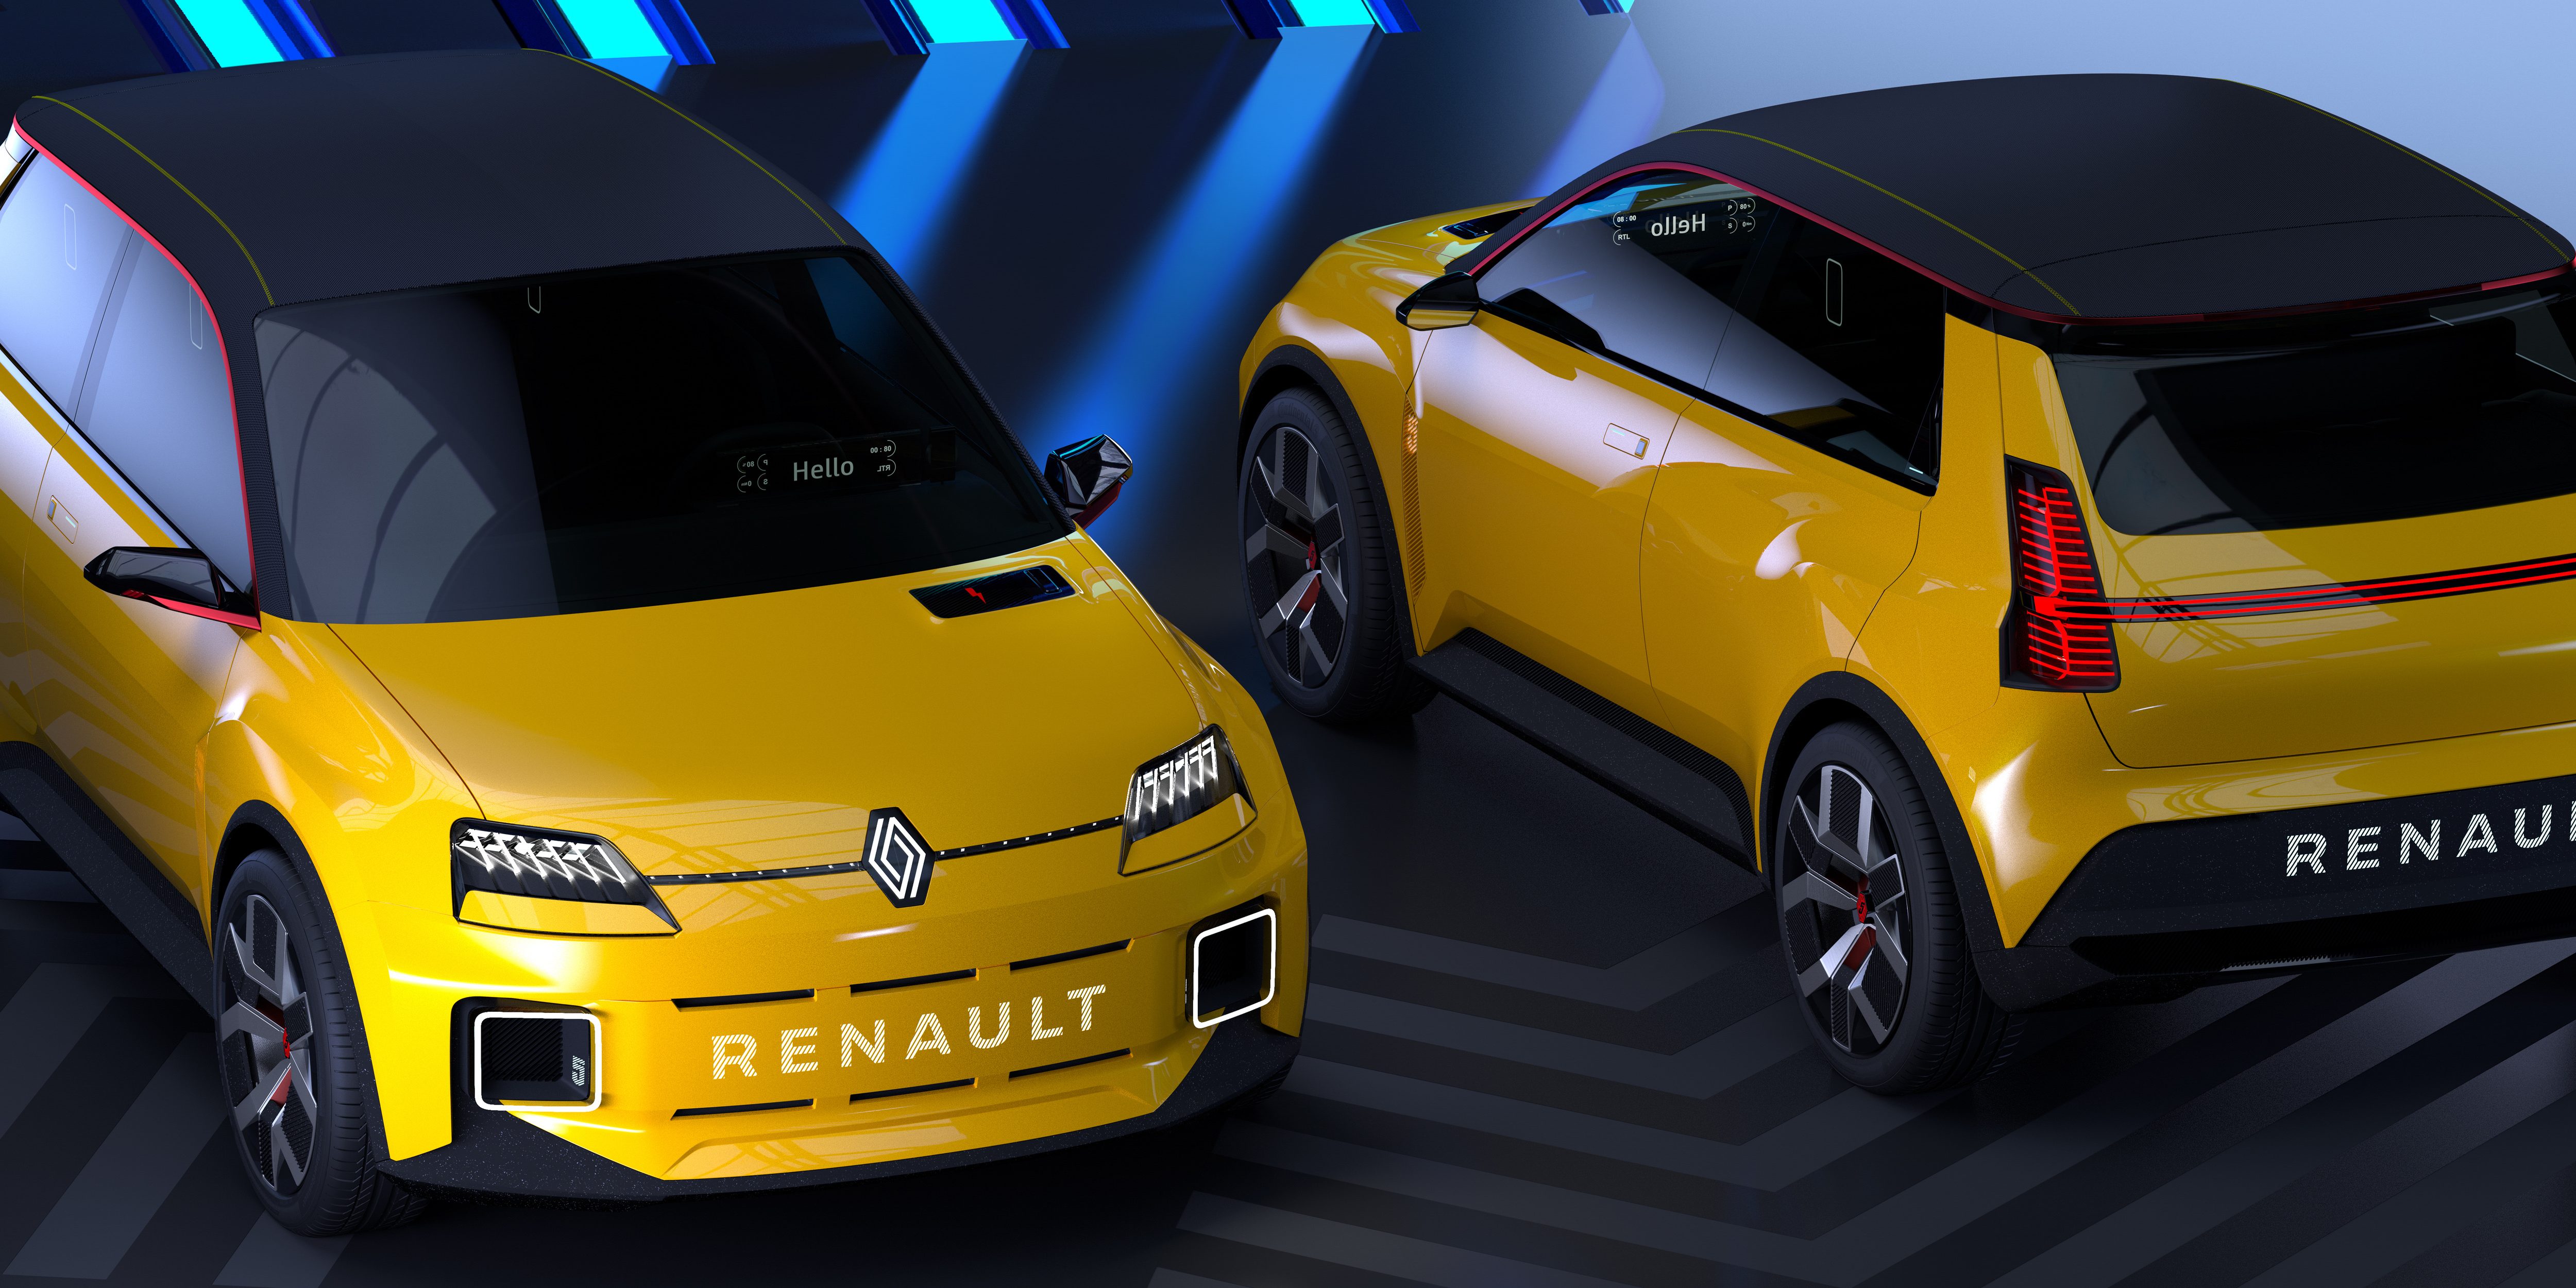 Renault announces 7 new electric cars, unveils Renault 5 electric